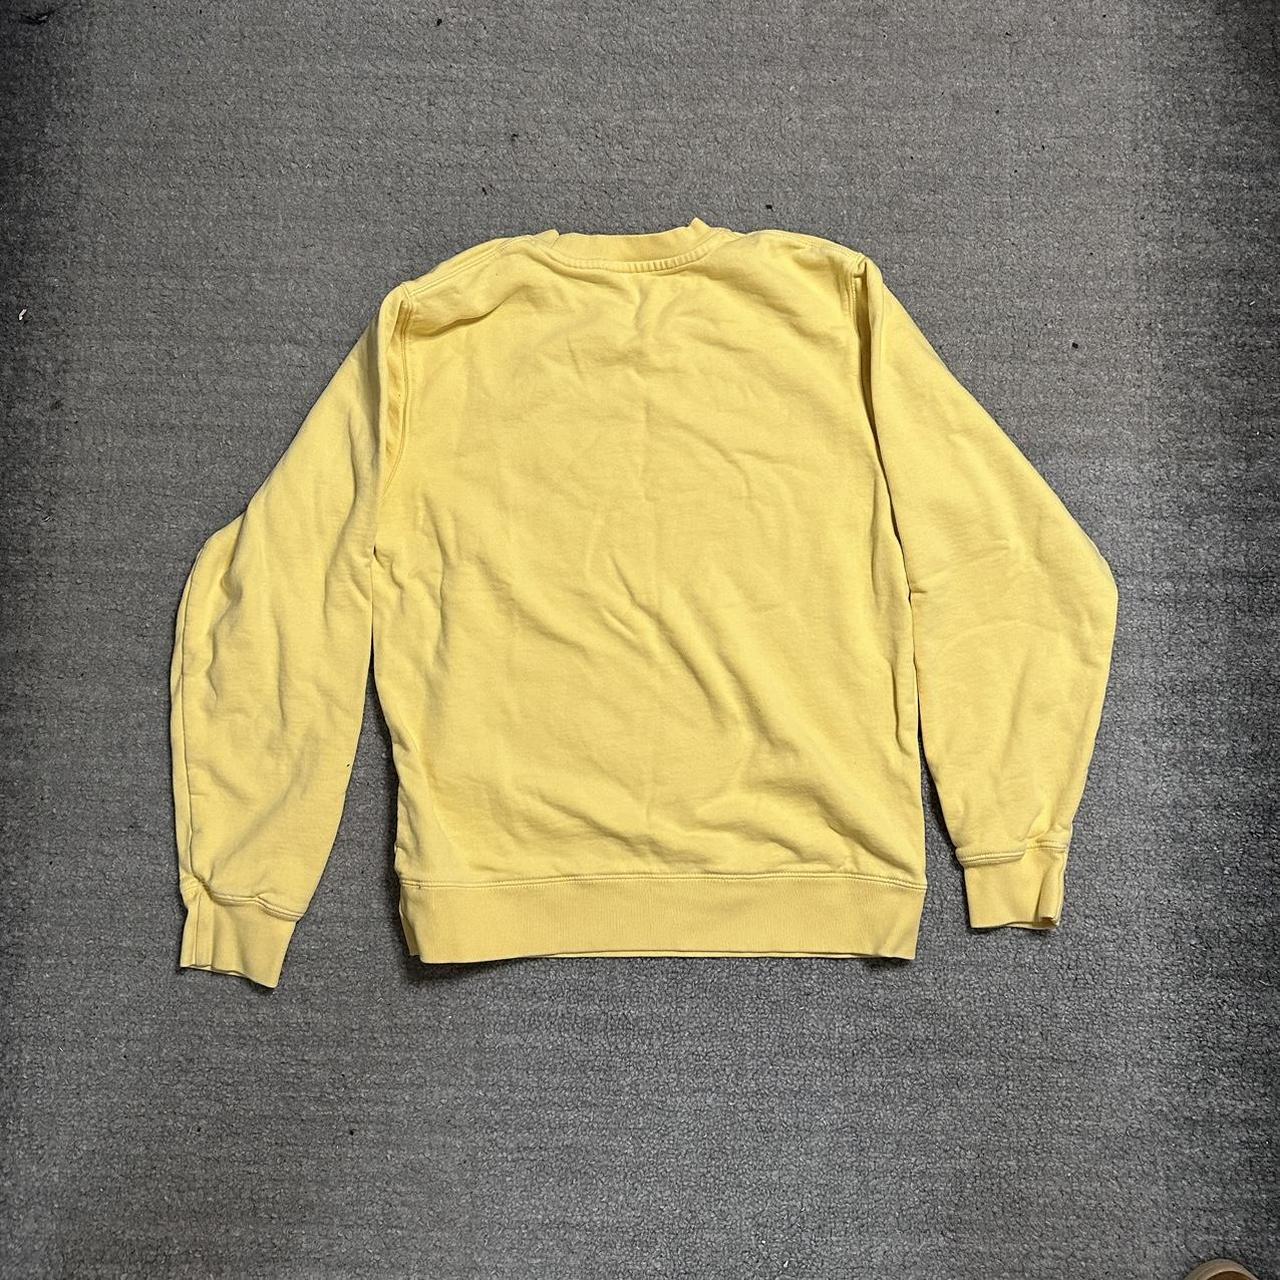 Brandy Melville Women's Yellow Sweatshirt (2)